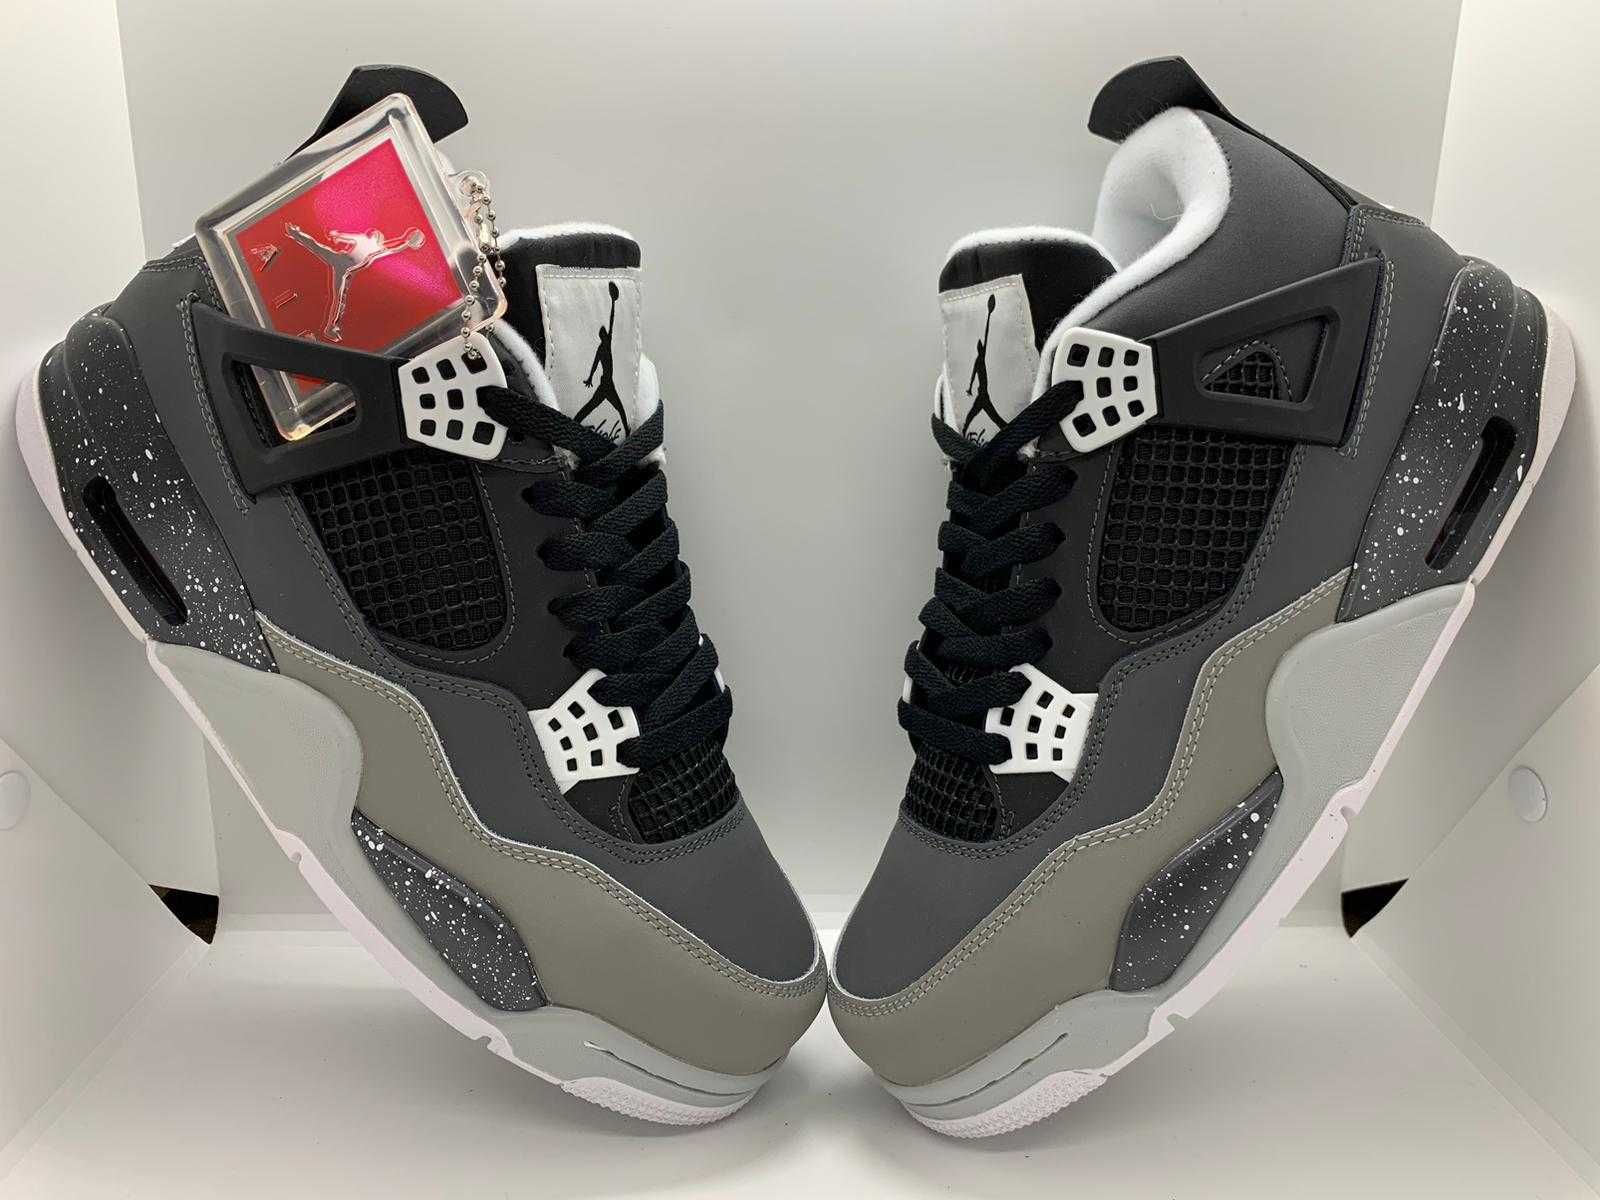 Air Jordan 4 Retro "Fear Pack" sneakers